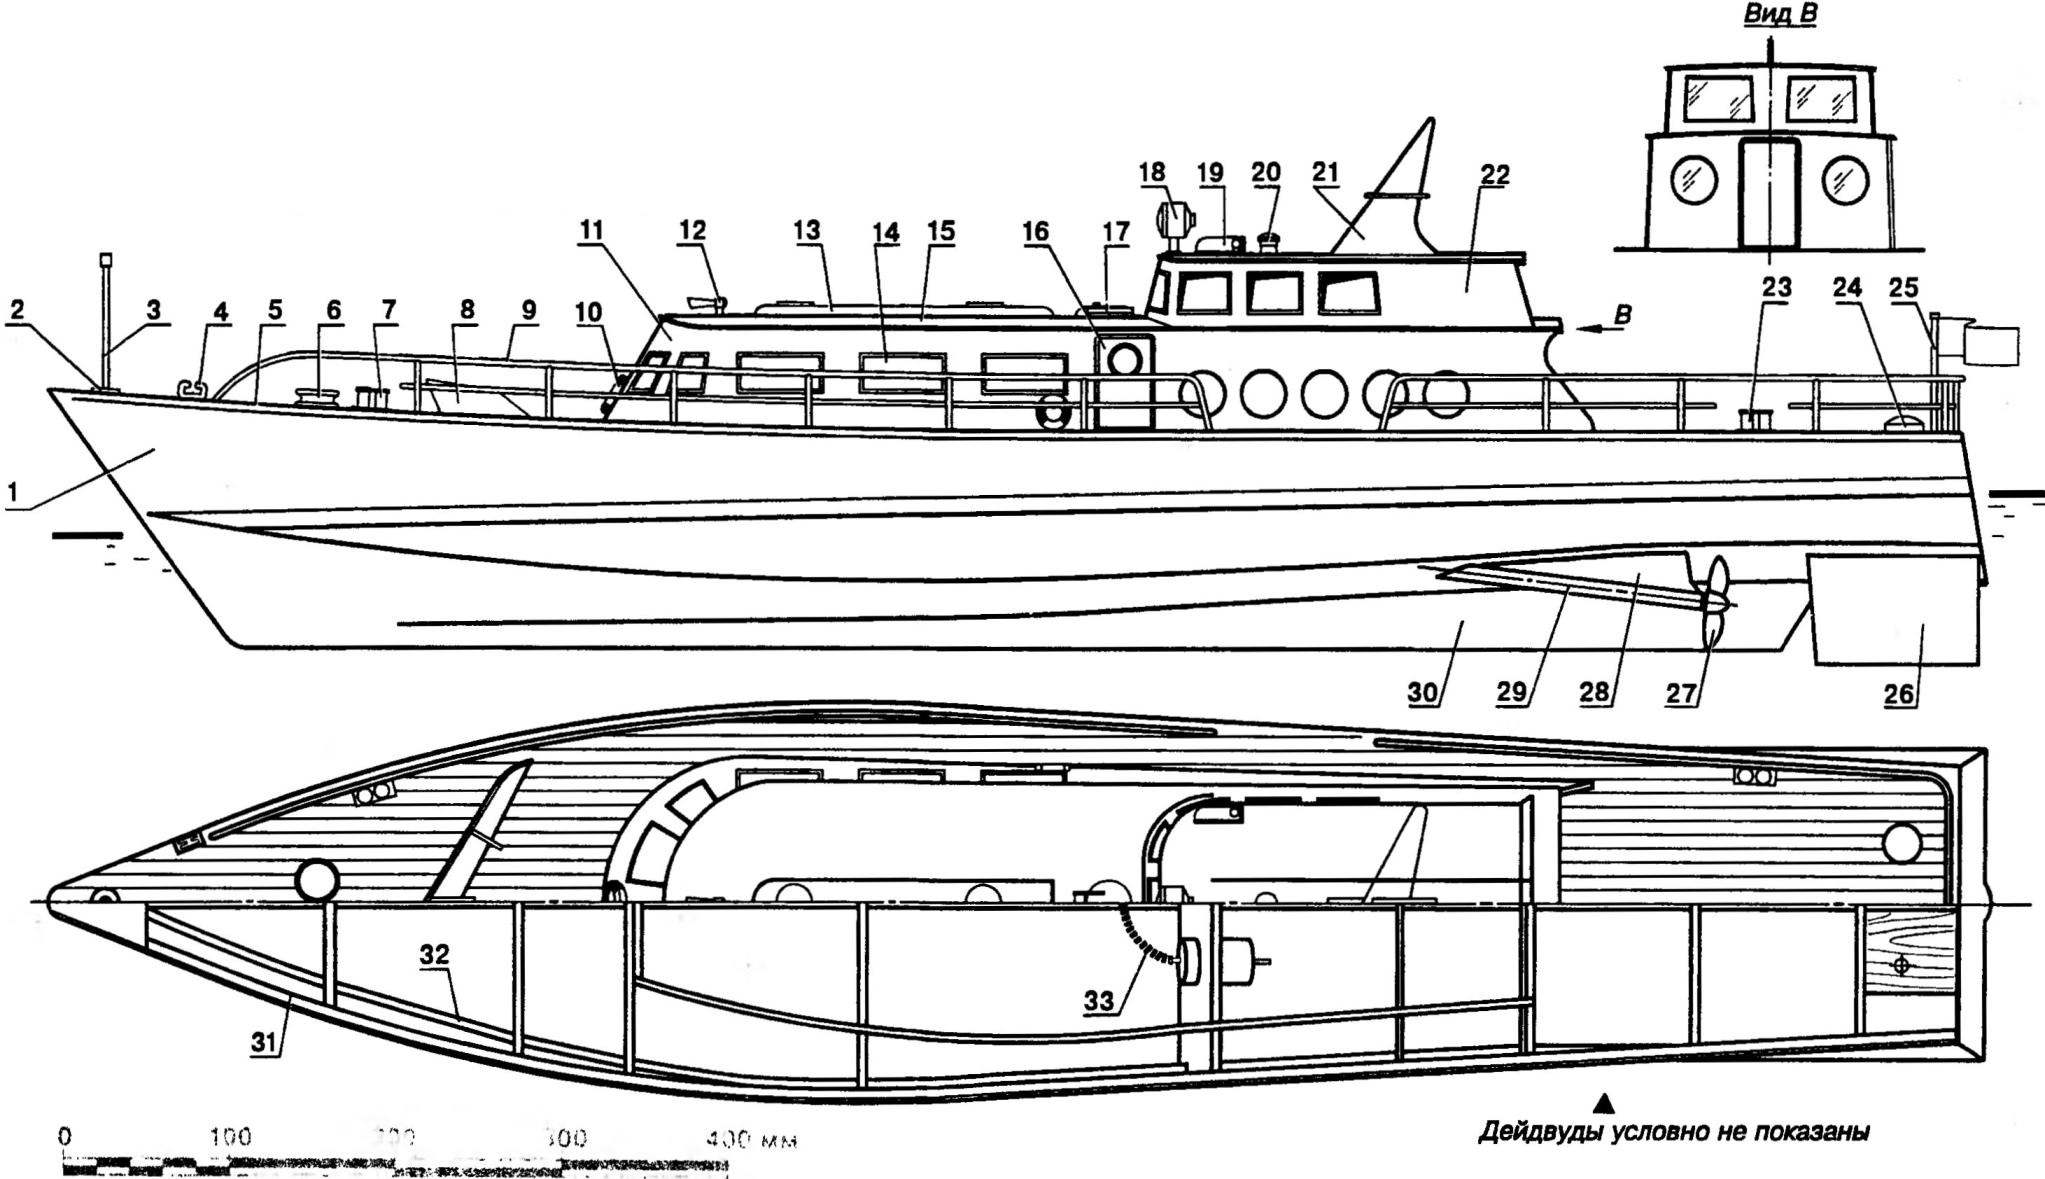 Model motor yacht